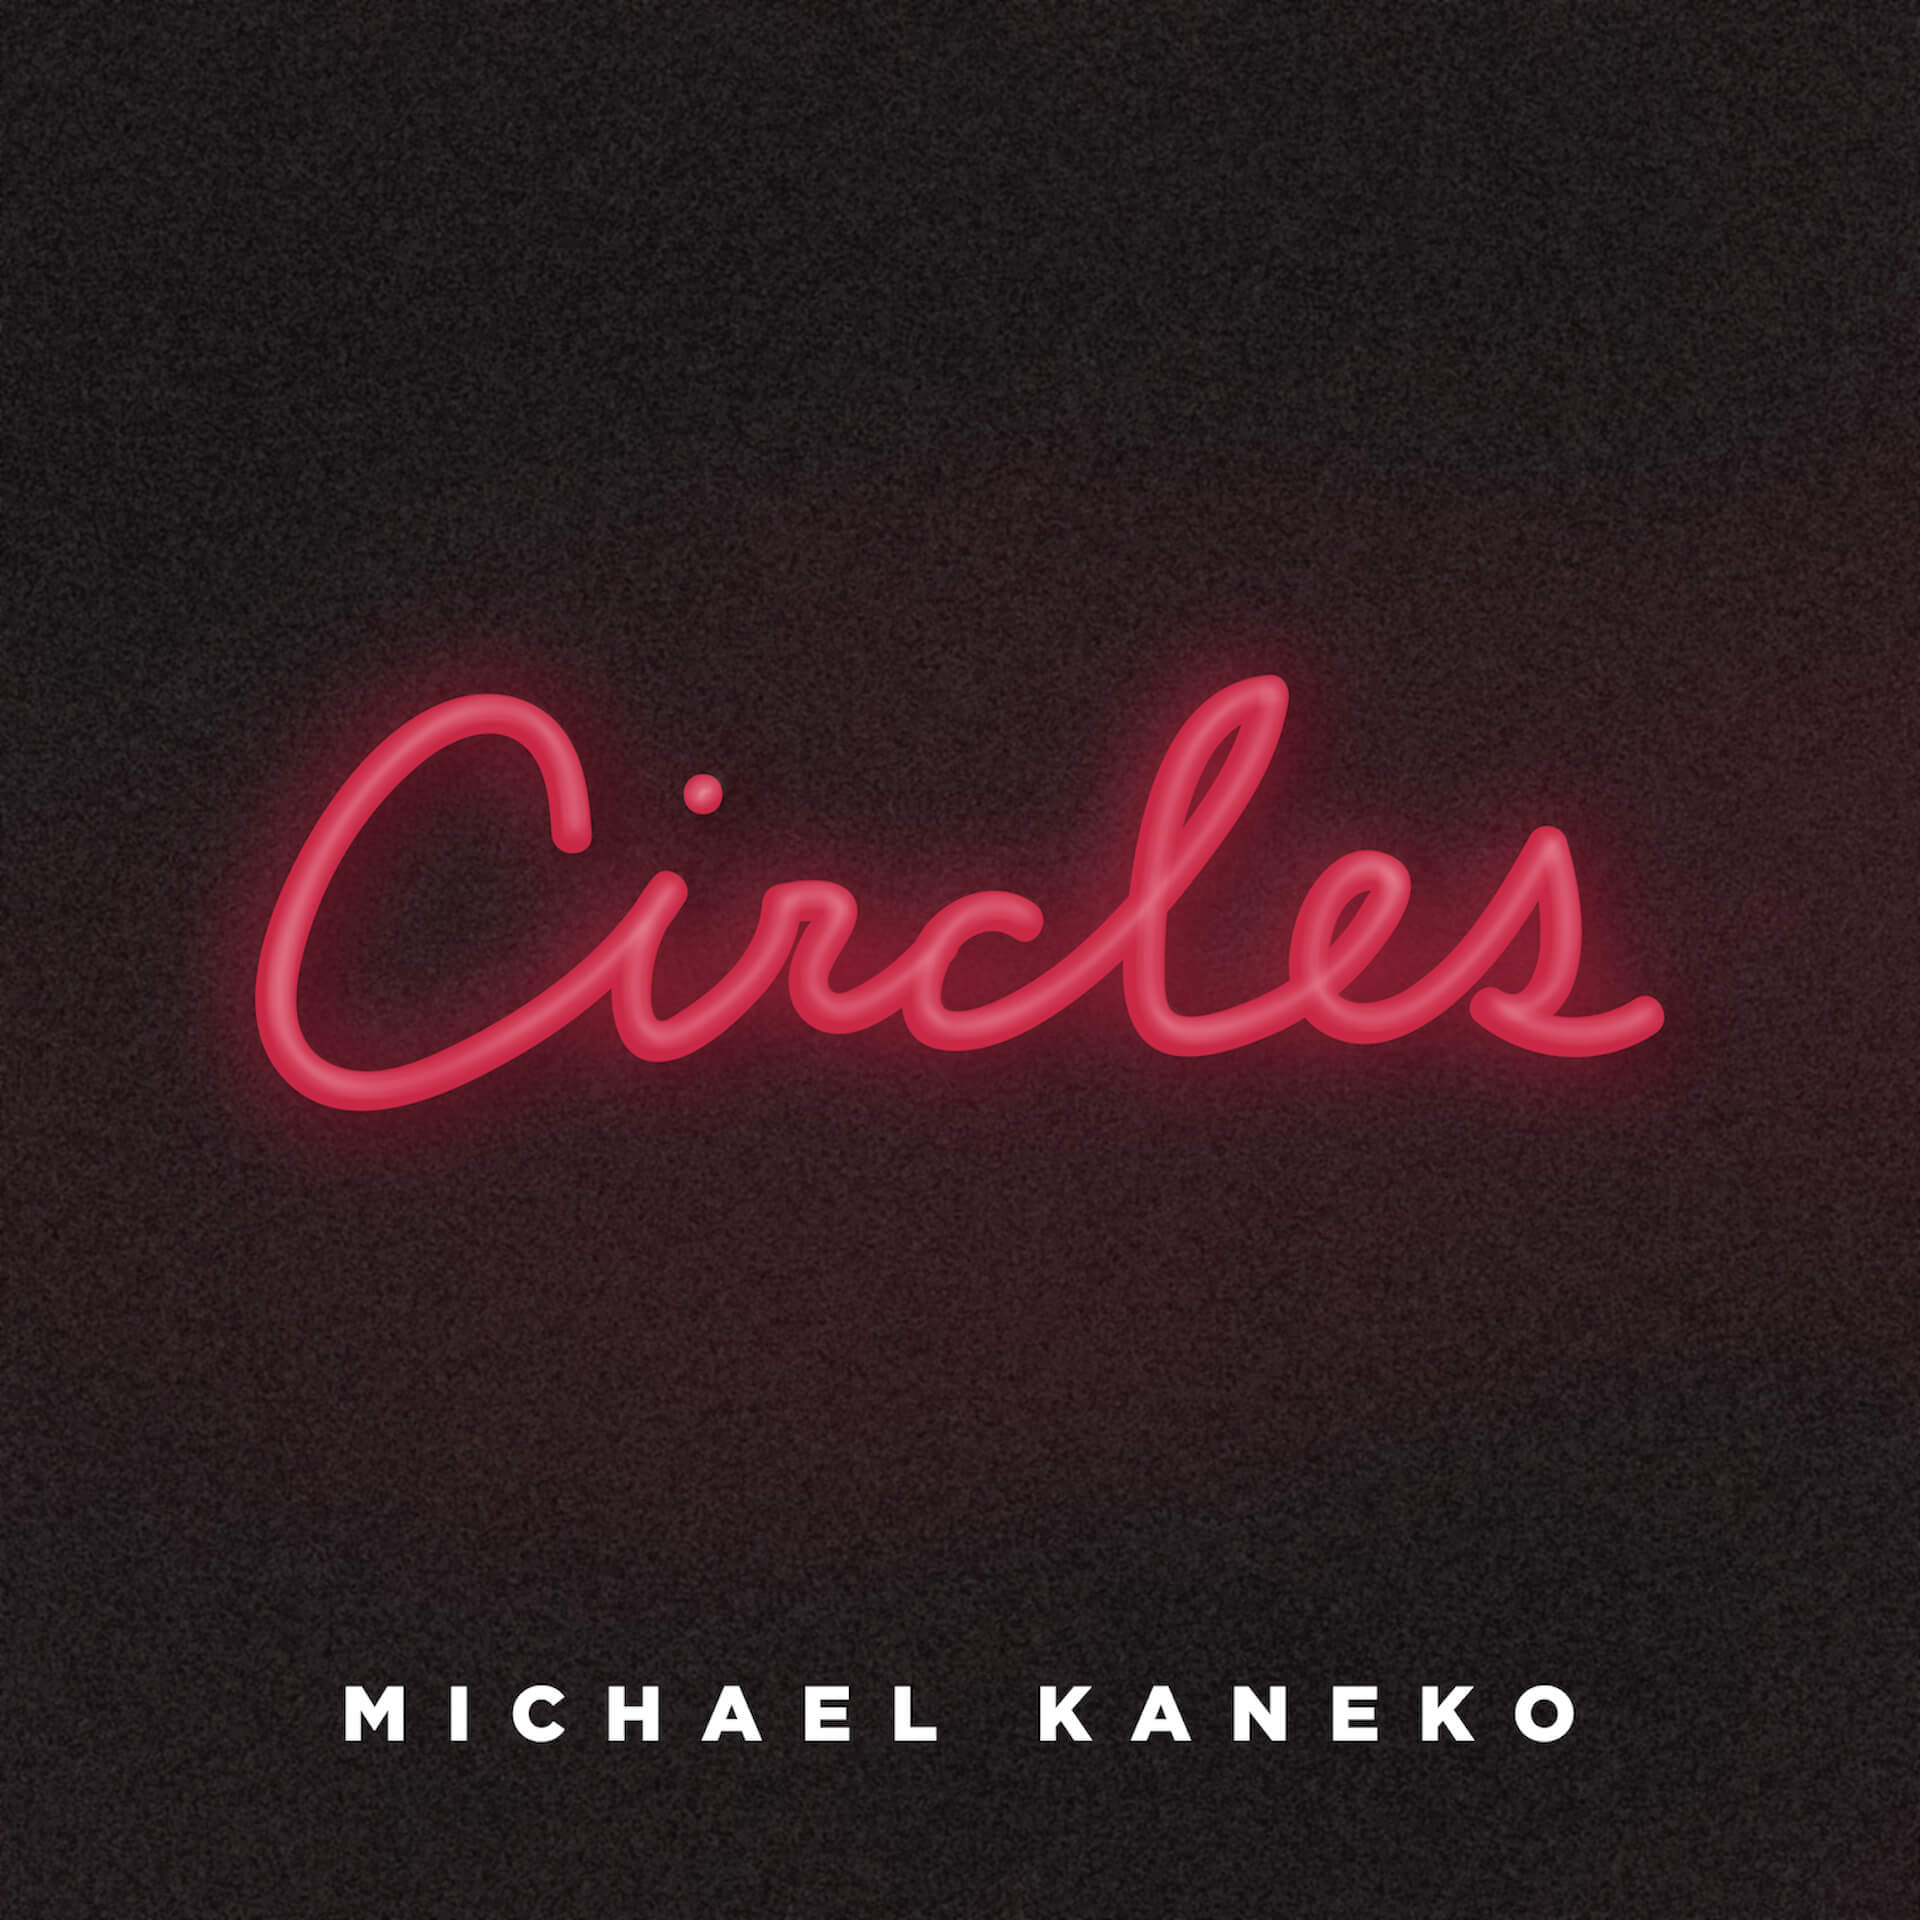 Michael Kanekoが、1stアルバムに向けてハイライトとなるニューシングル“Circles”をリリース 191004_michaelkaneko_02